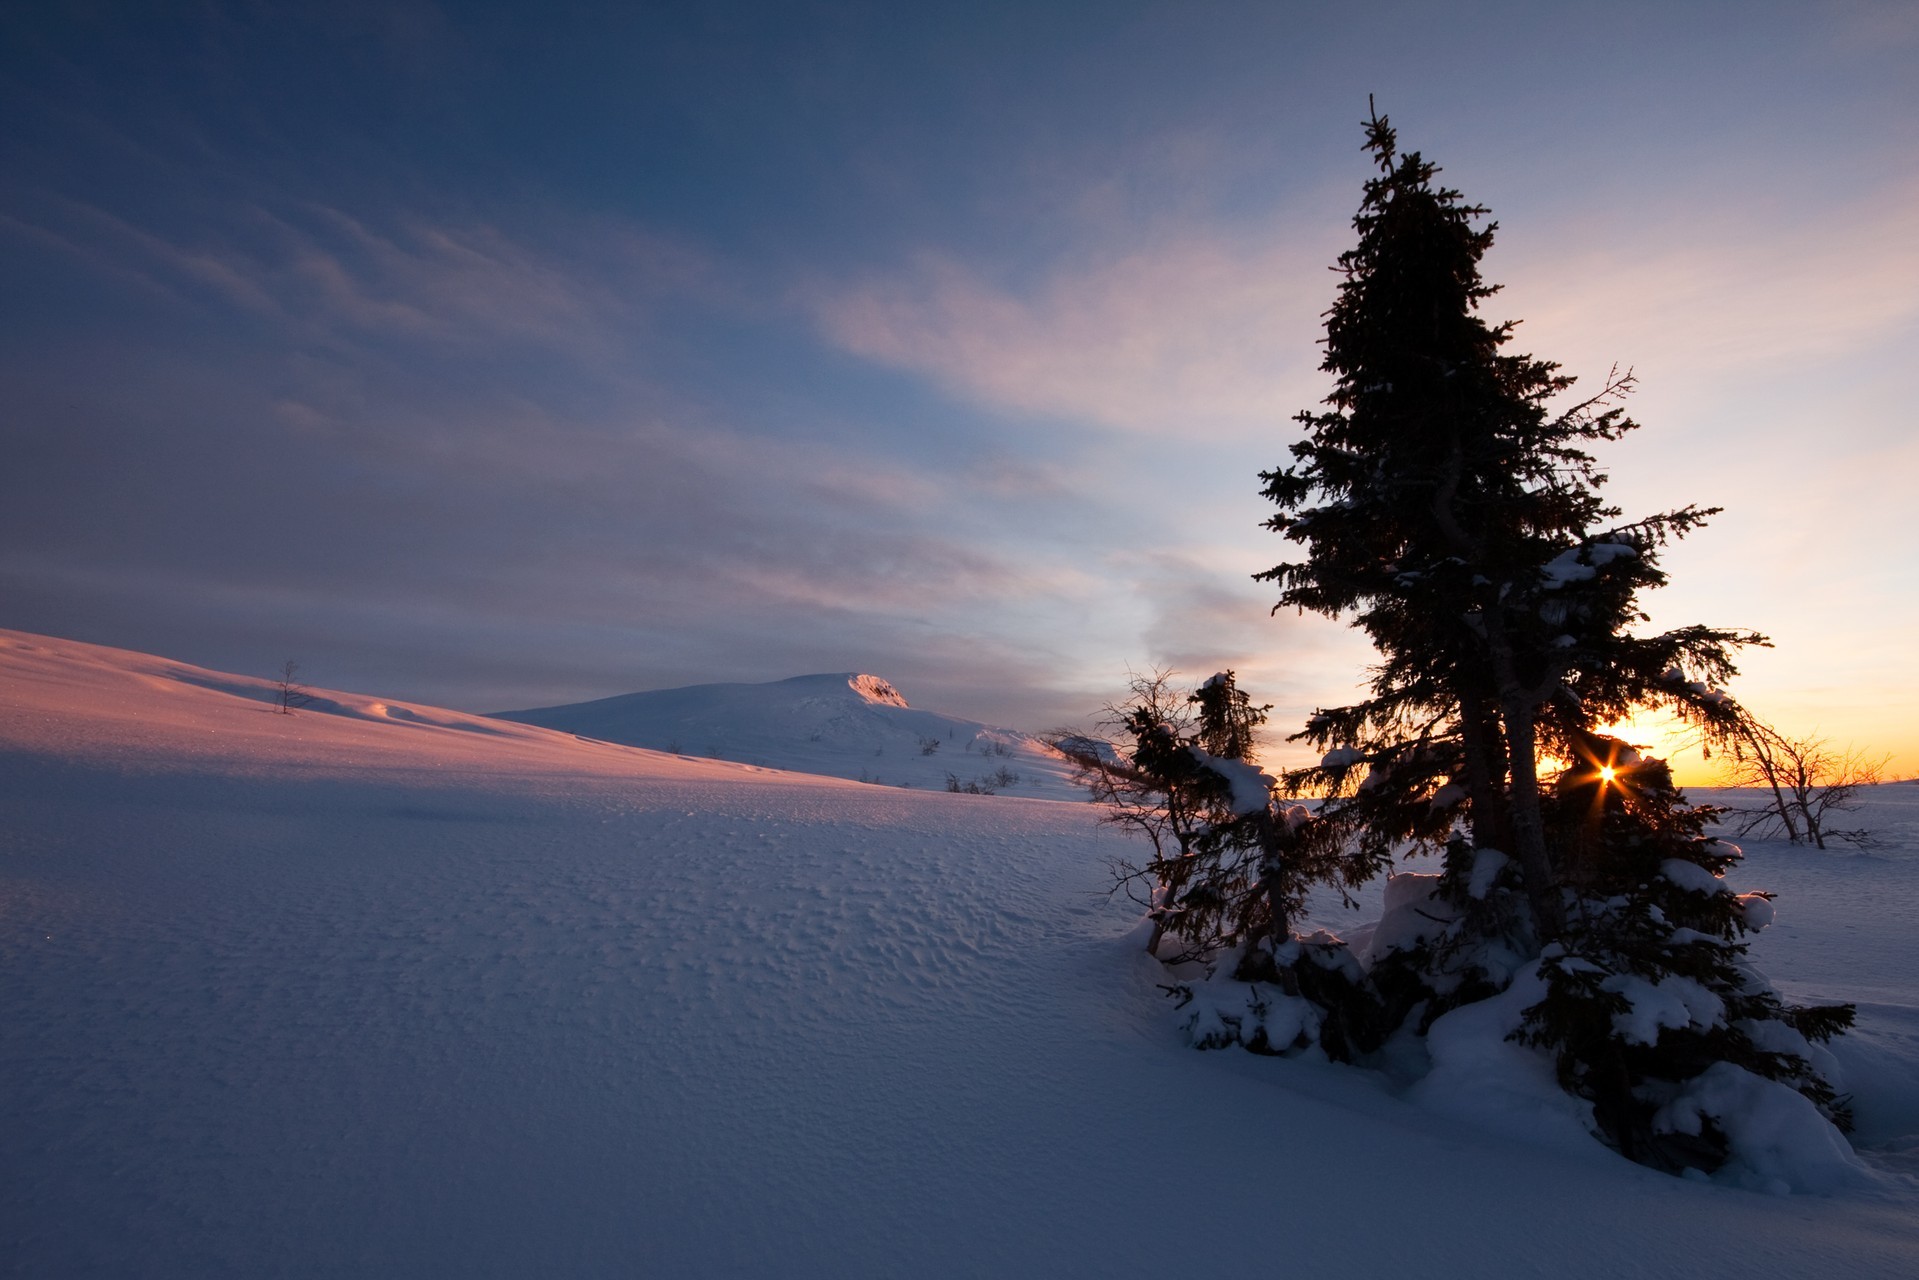 General 1919x1280 winter snow pine trees landscape sunset nature sky